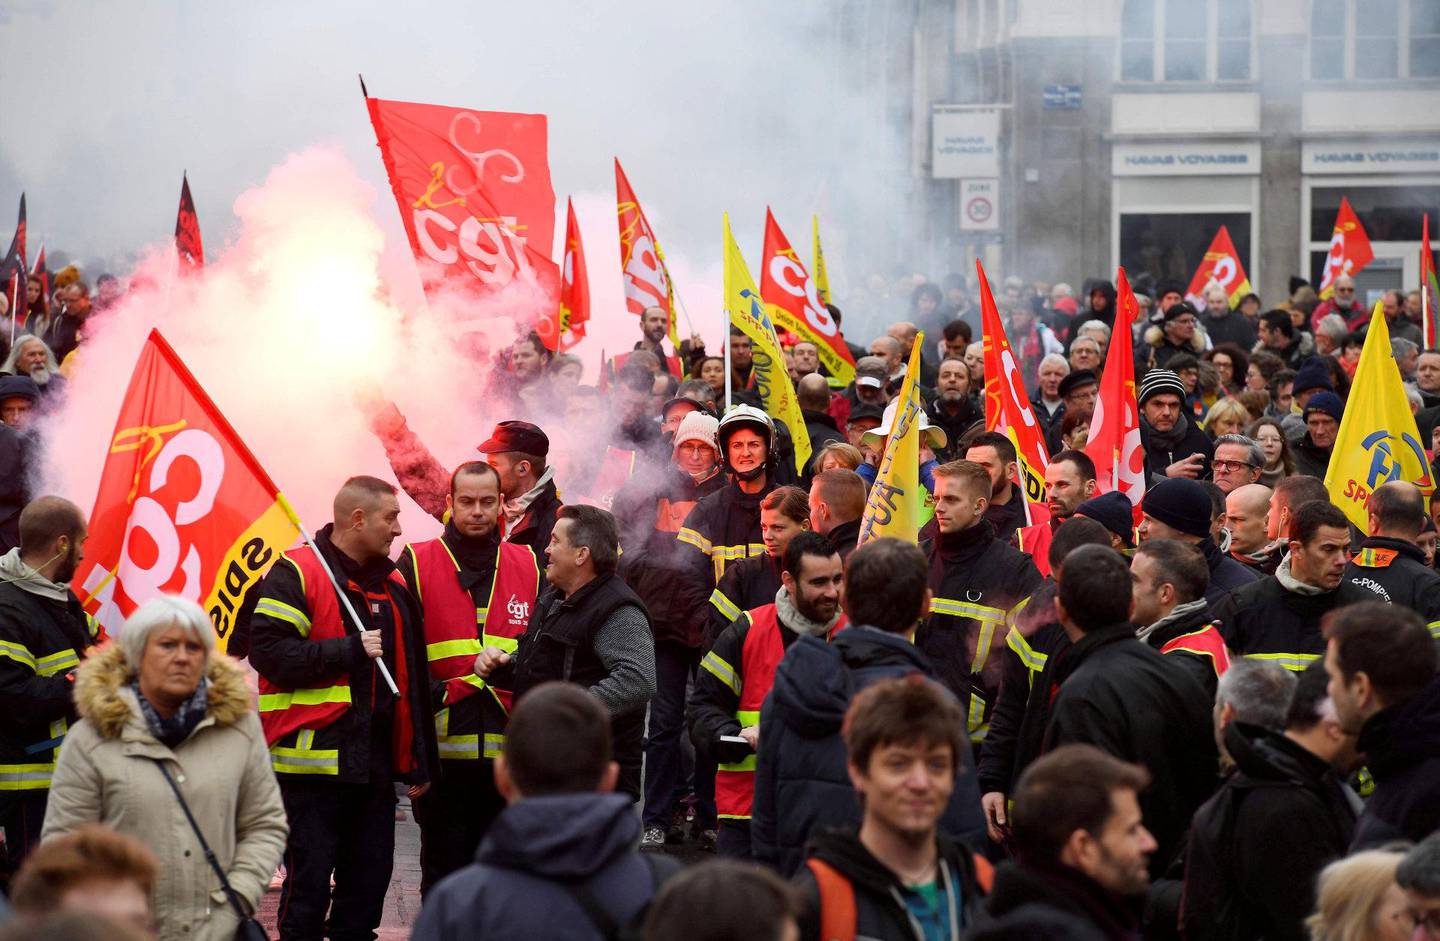 Brannmenn deltar i protestene i Rennes. Foto: NTB scanpix